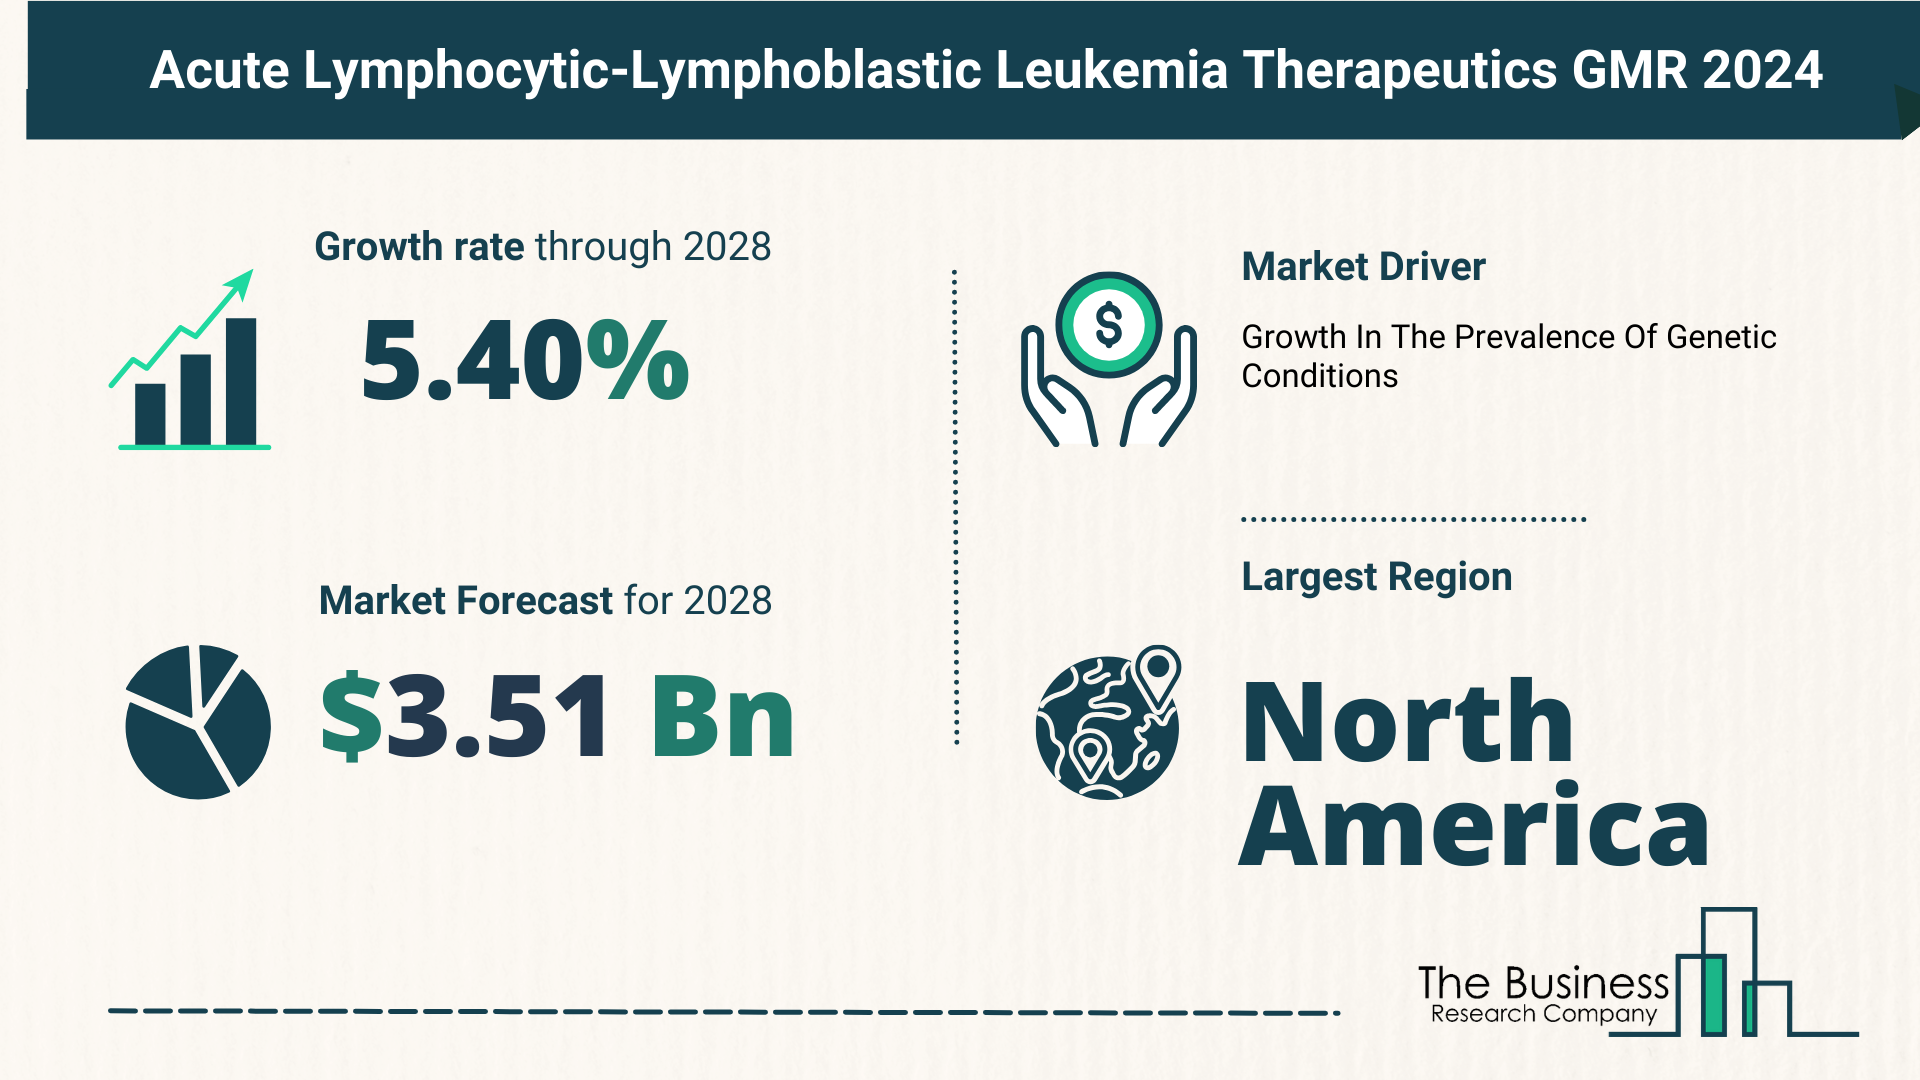 Global Acute Lymphocytic-Lymphoblastic Leukemia Therapeutics Market